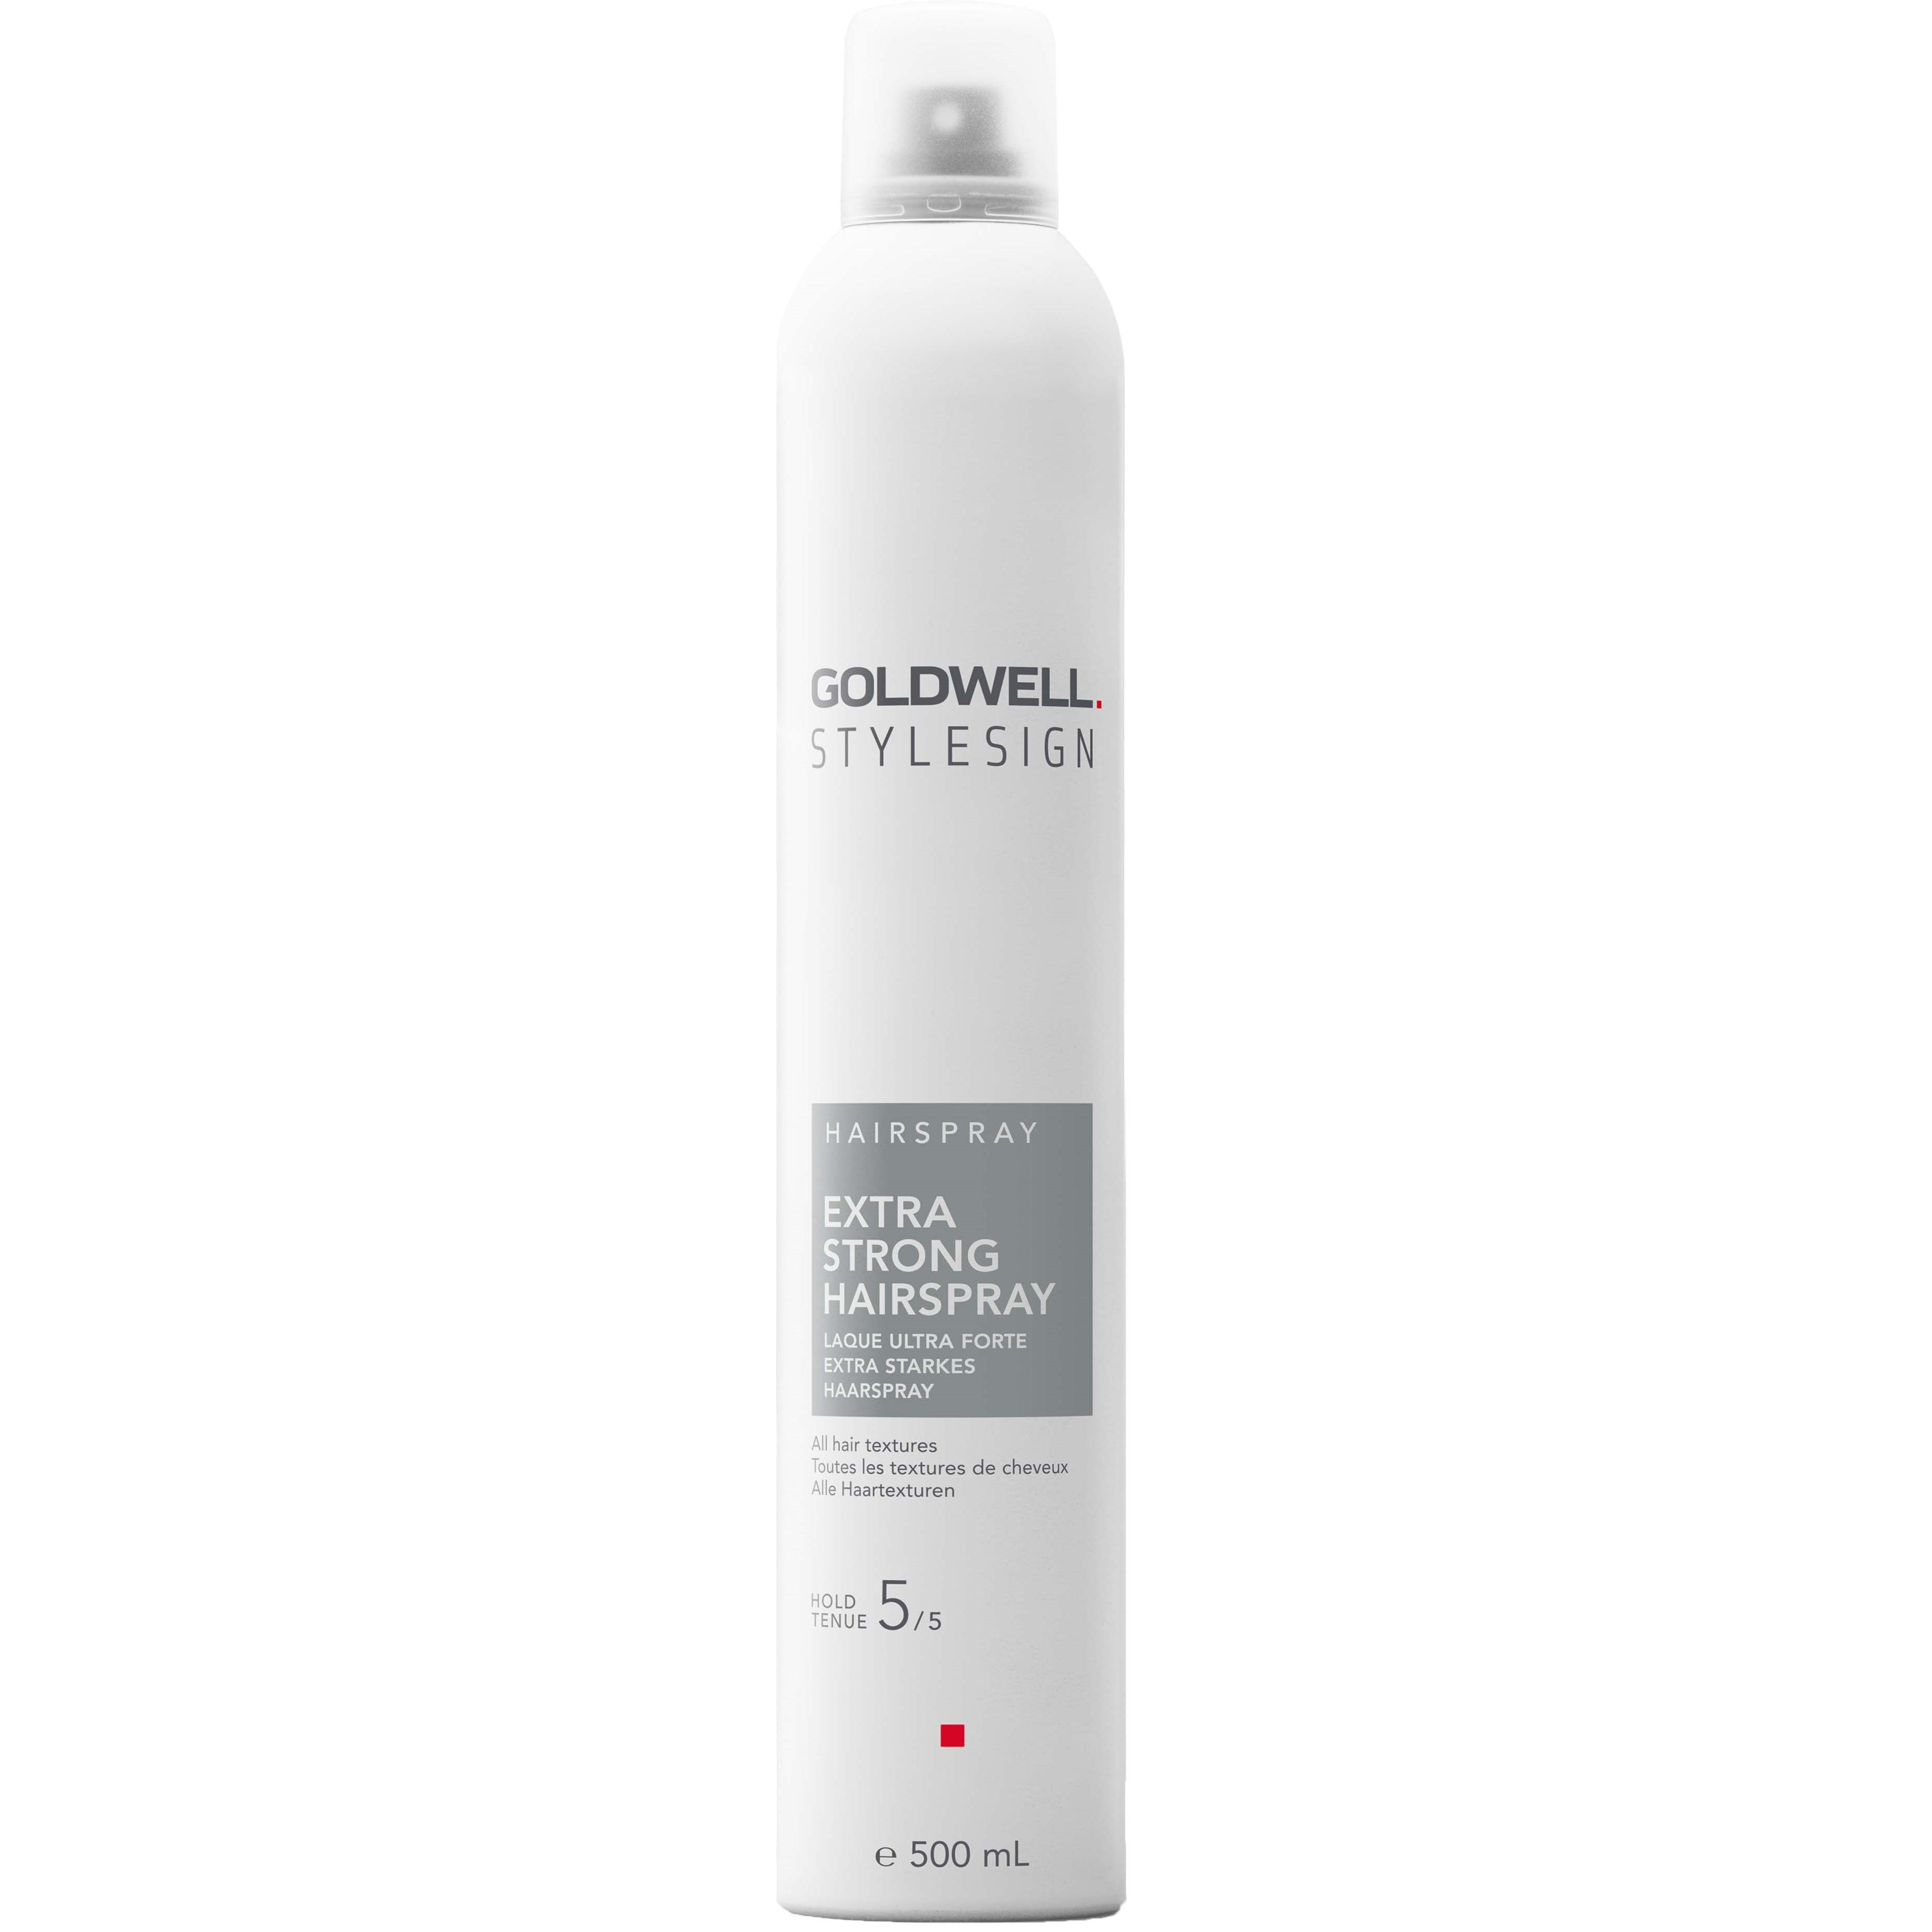 Läs mer om Goldwell StyleSign Hairspray Extra Strong Hairspray 500 ml